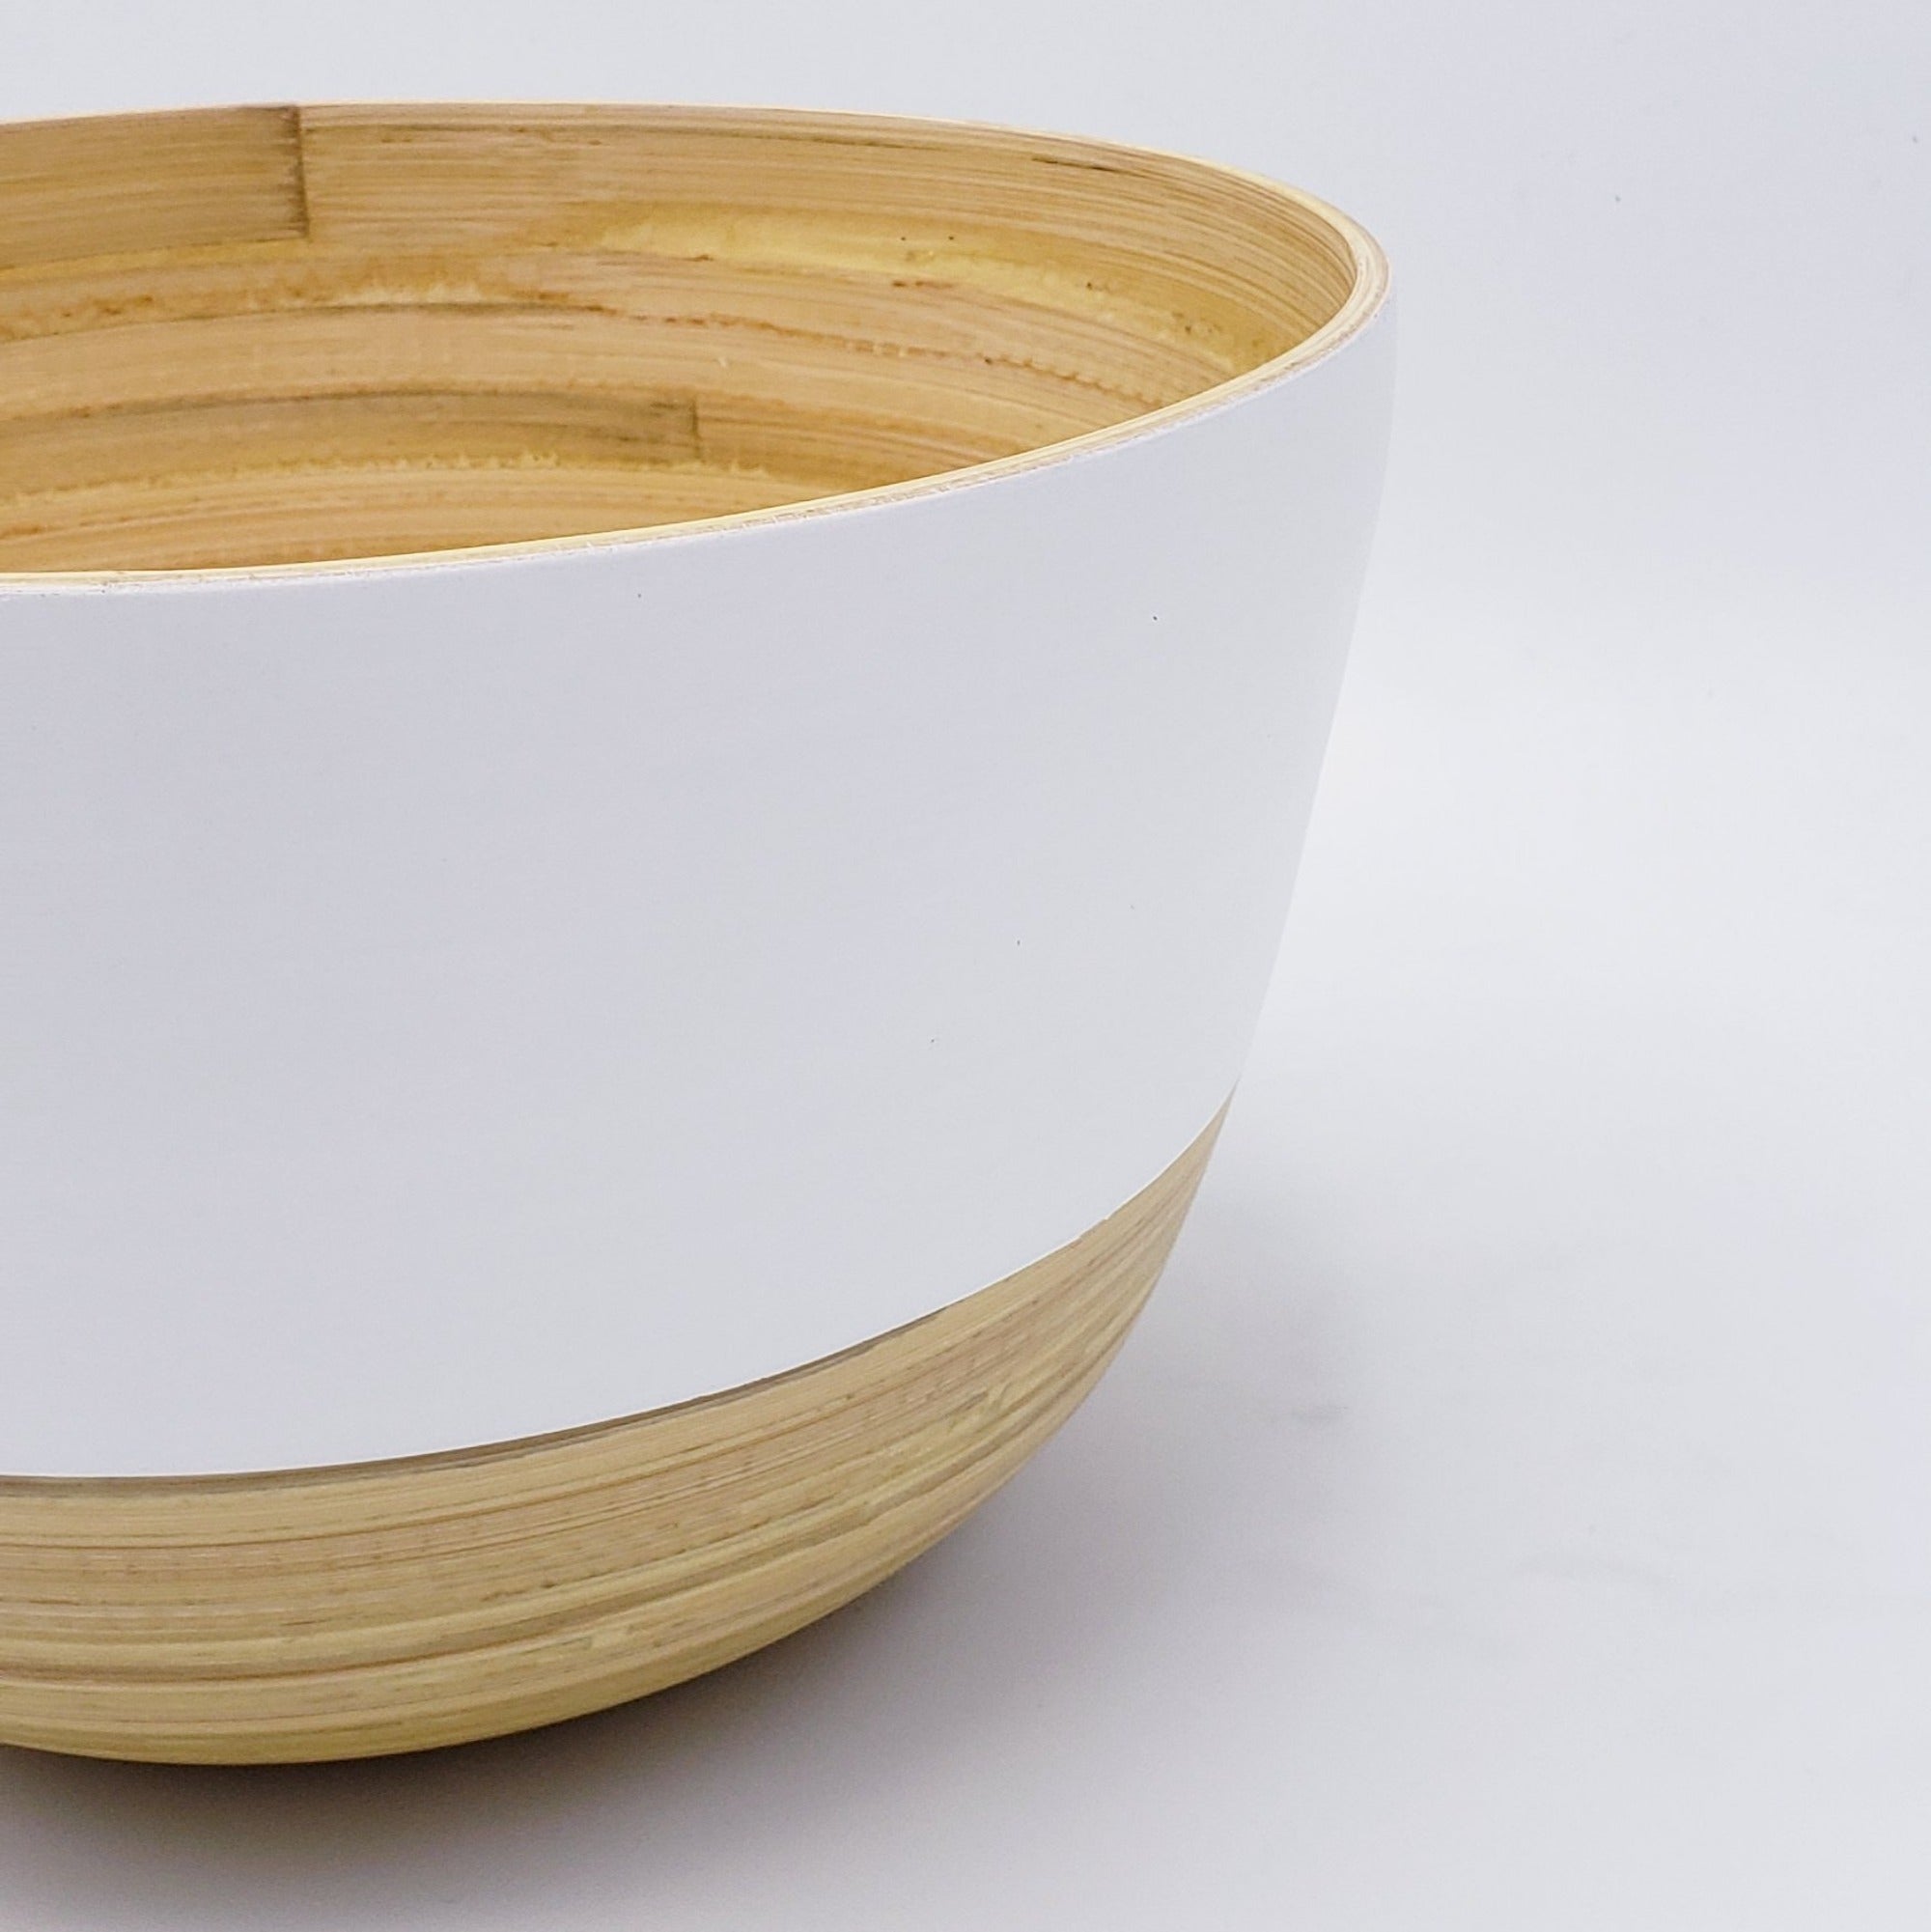 Large Bamboo Bowl - Cream